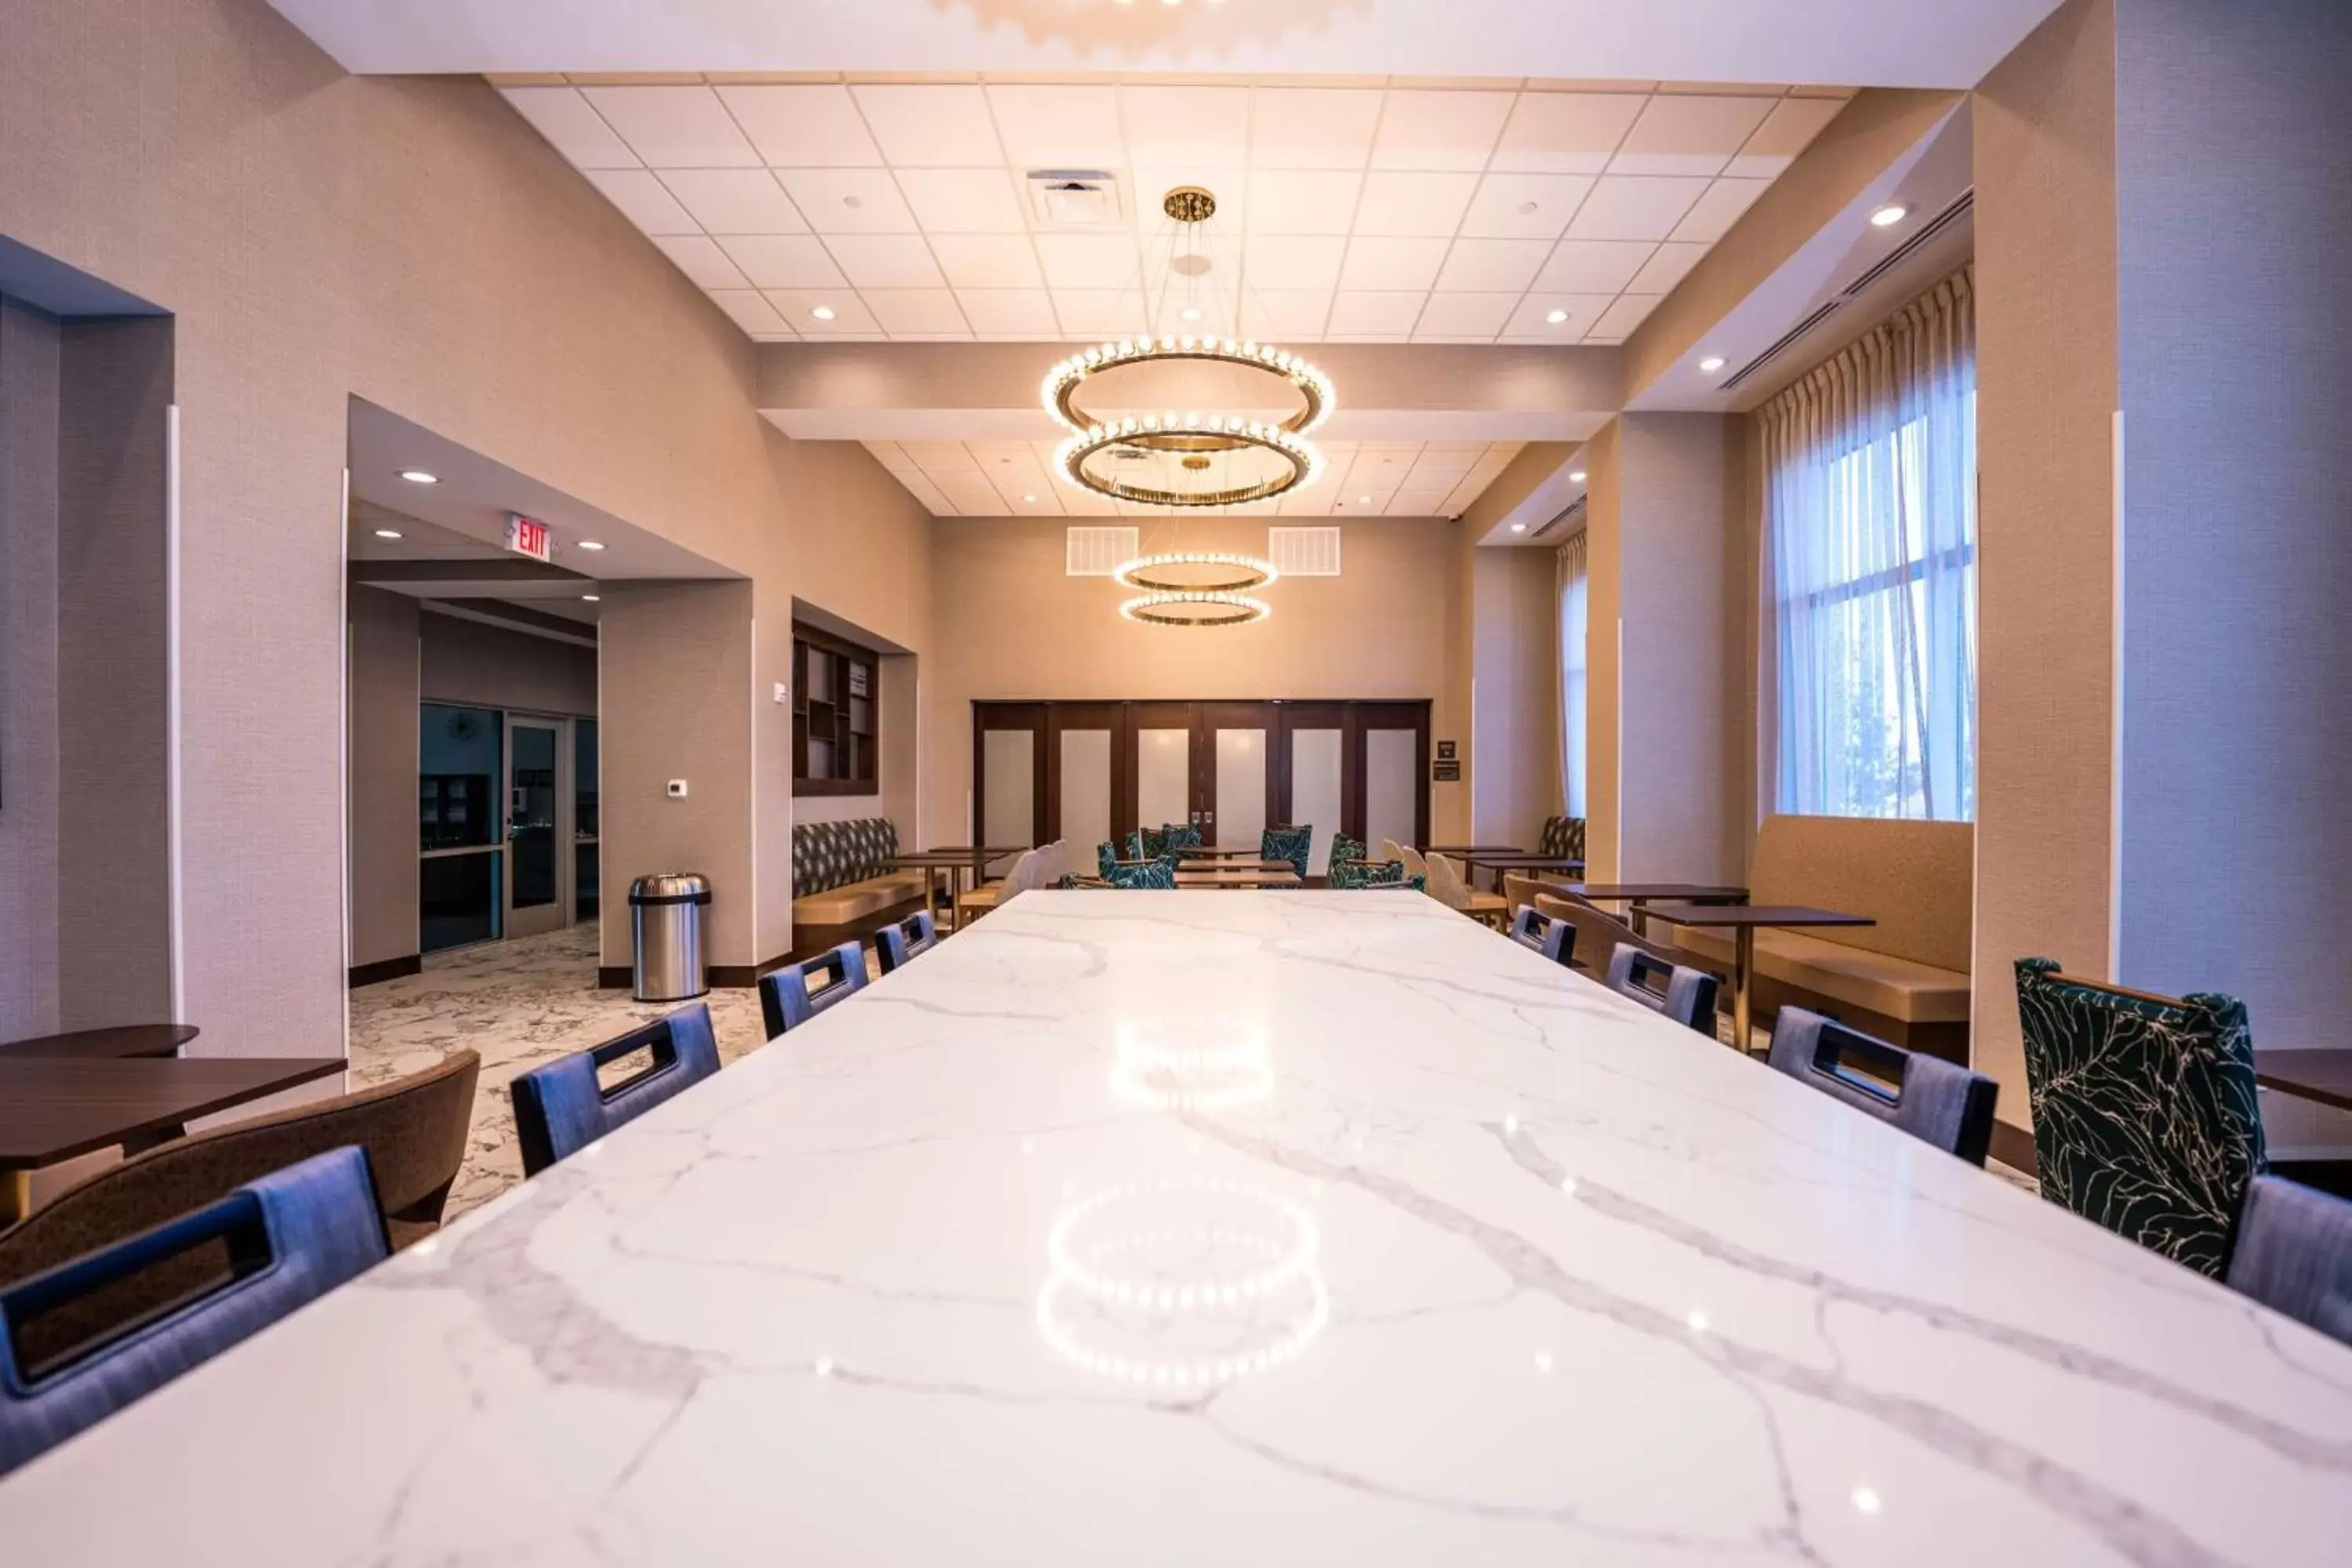 Lobby or reception in Hampton Inn & Suites Sugar Land, Tx